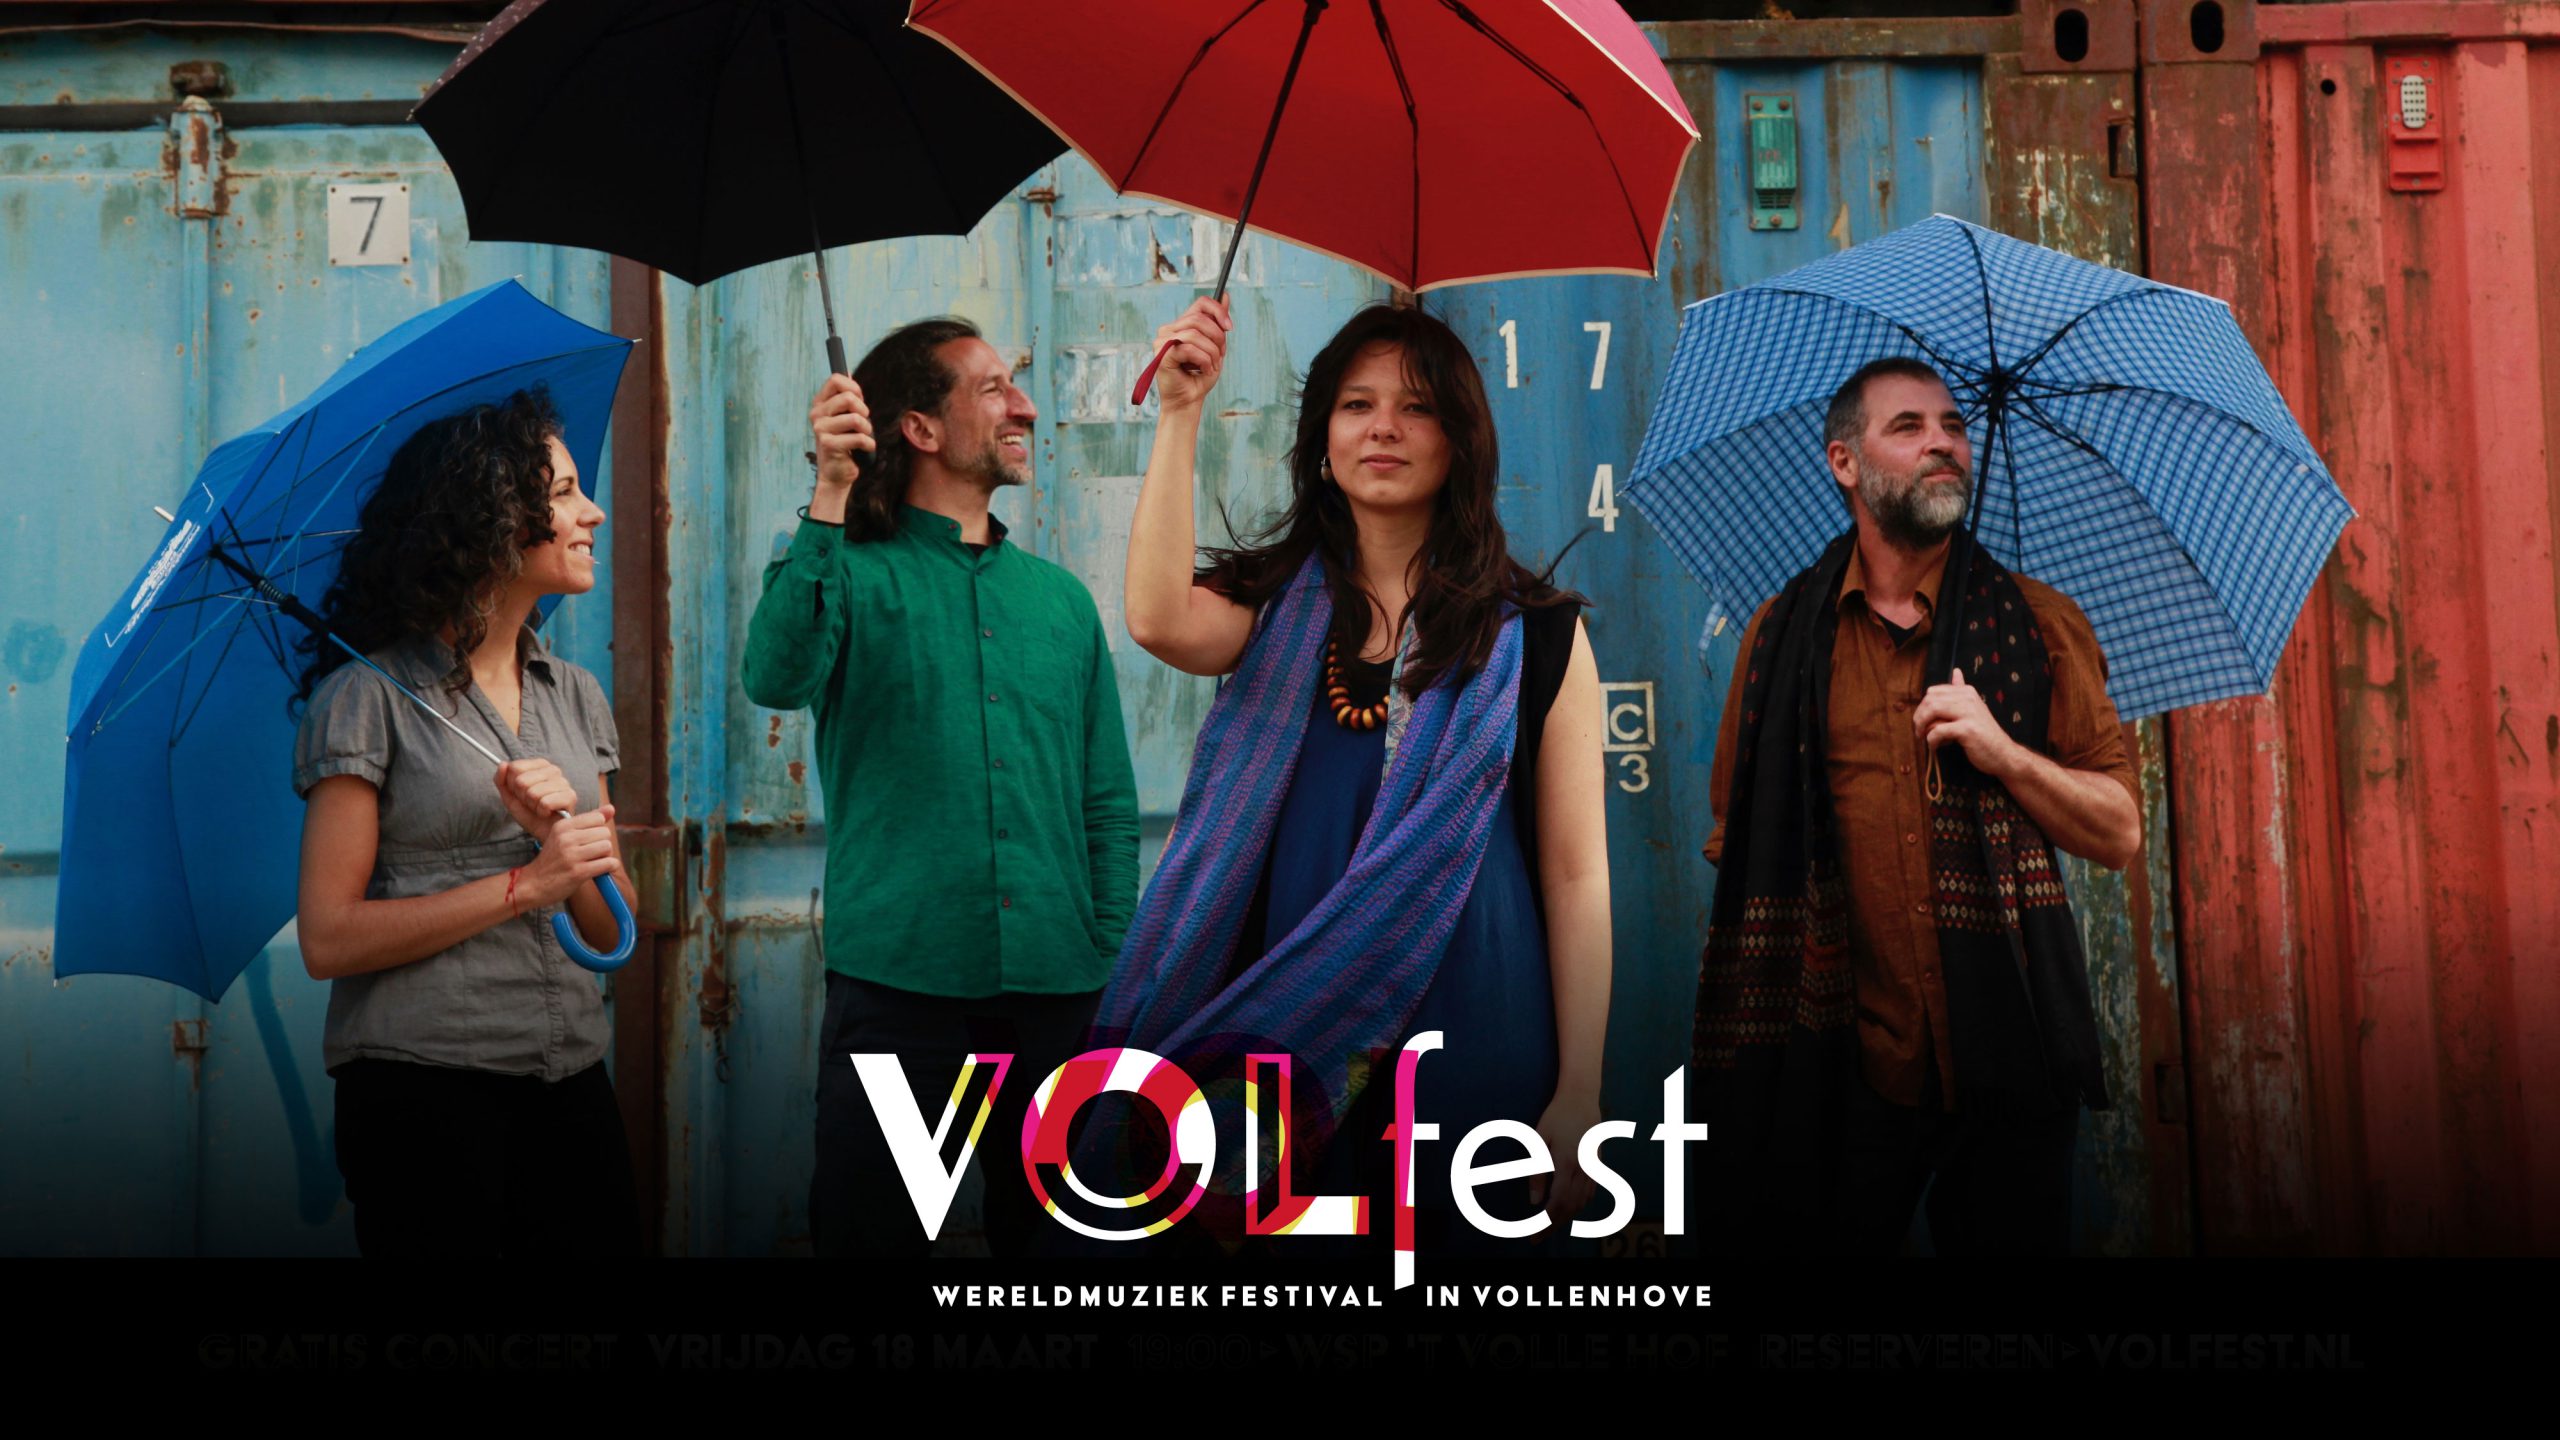 VOLfest: Wereldmuziekfestival in Vollenhove